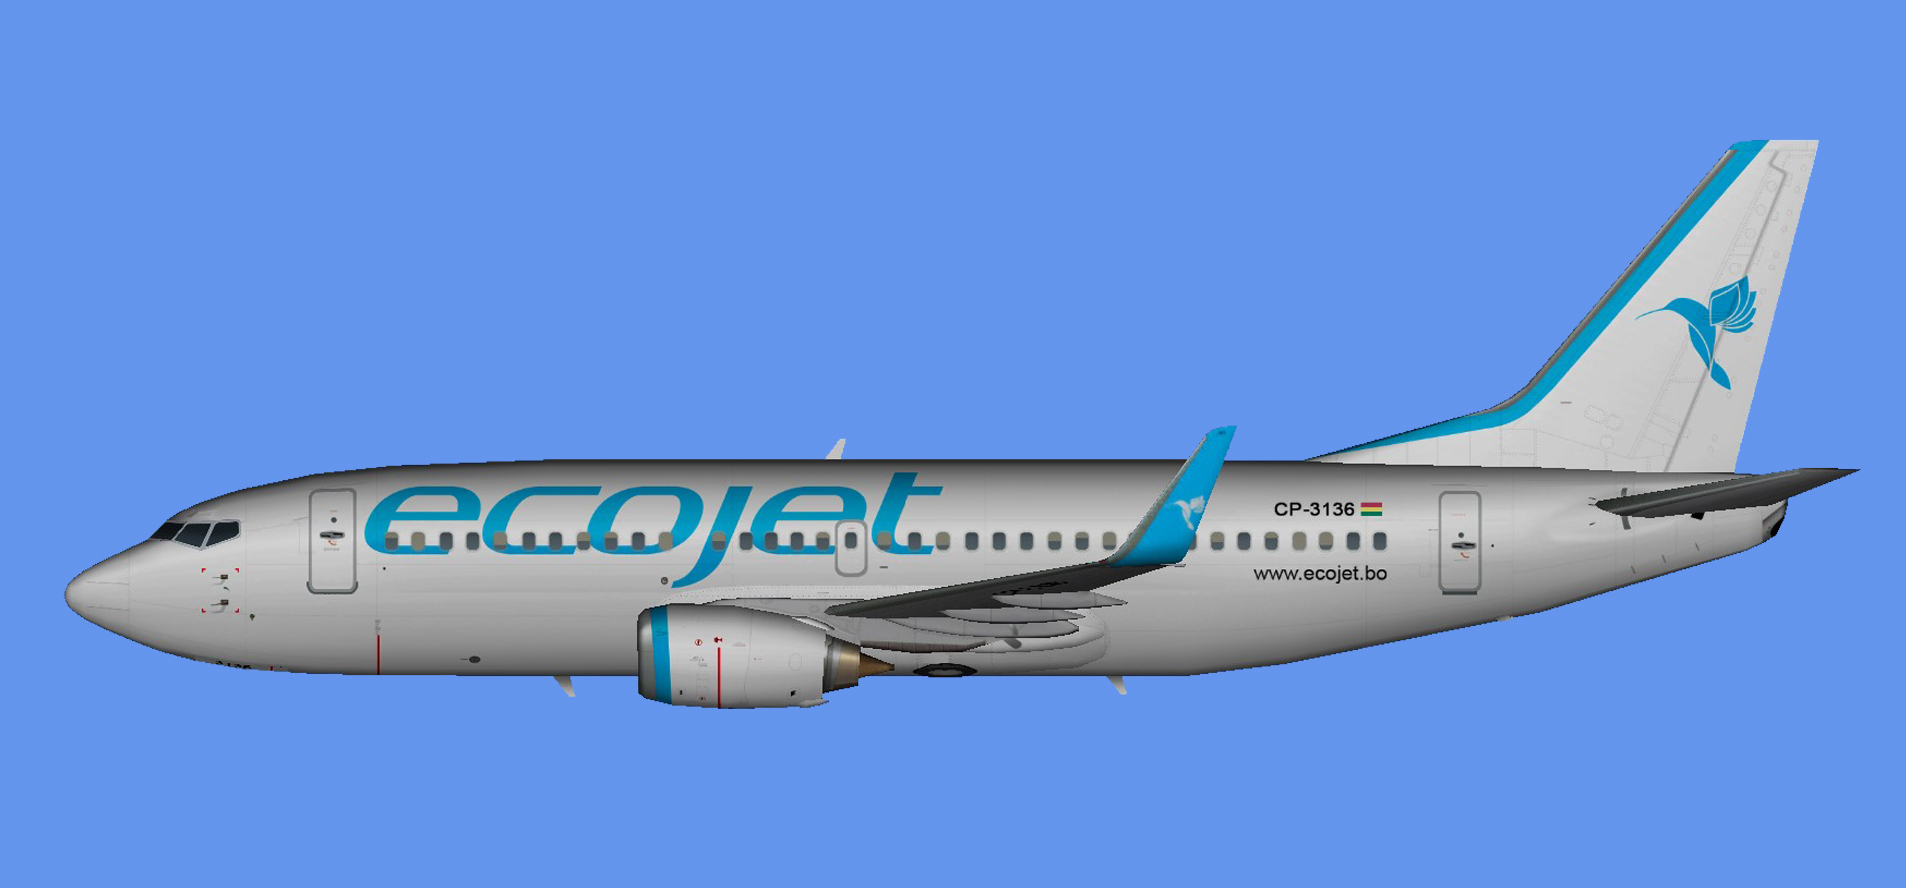 EcoJet Boeing 737-300